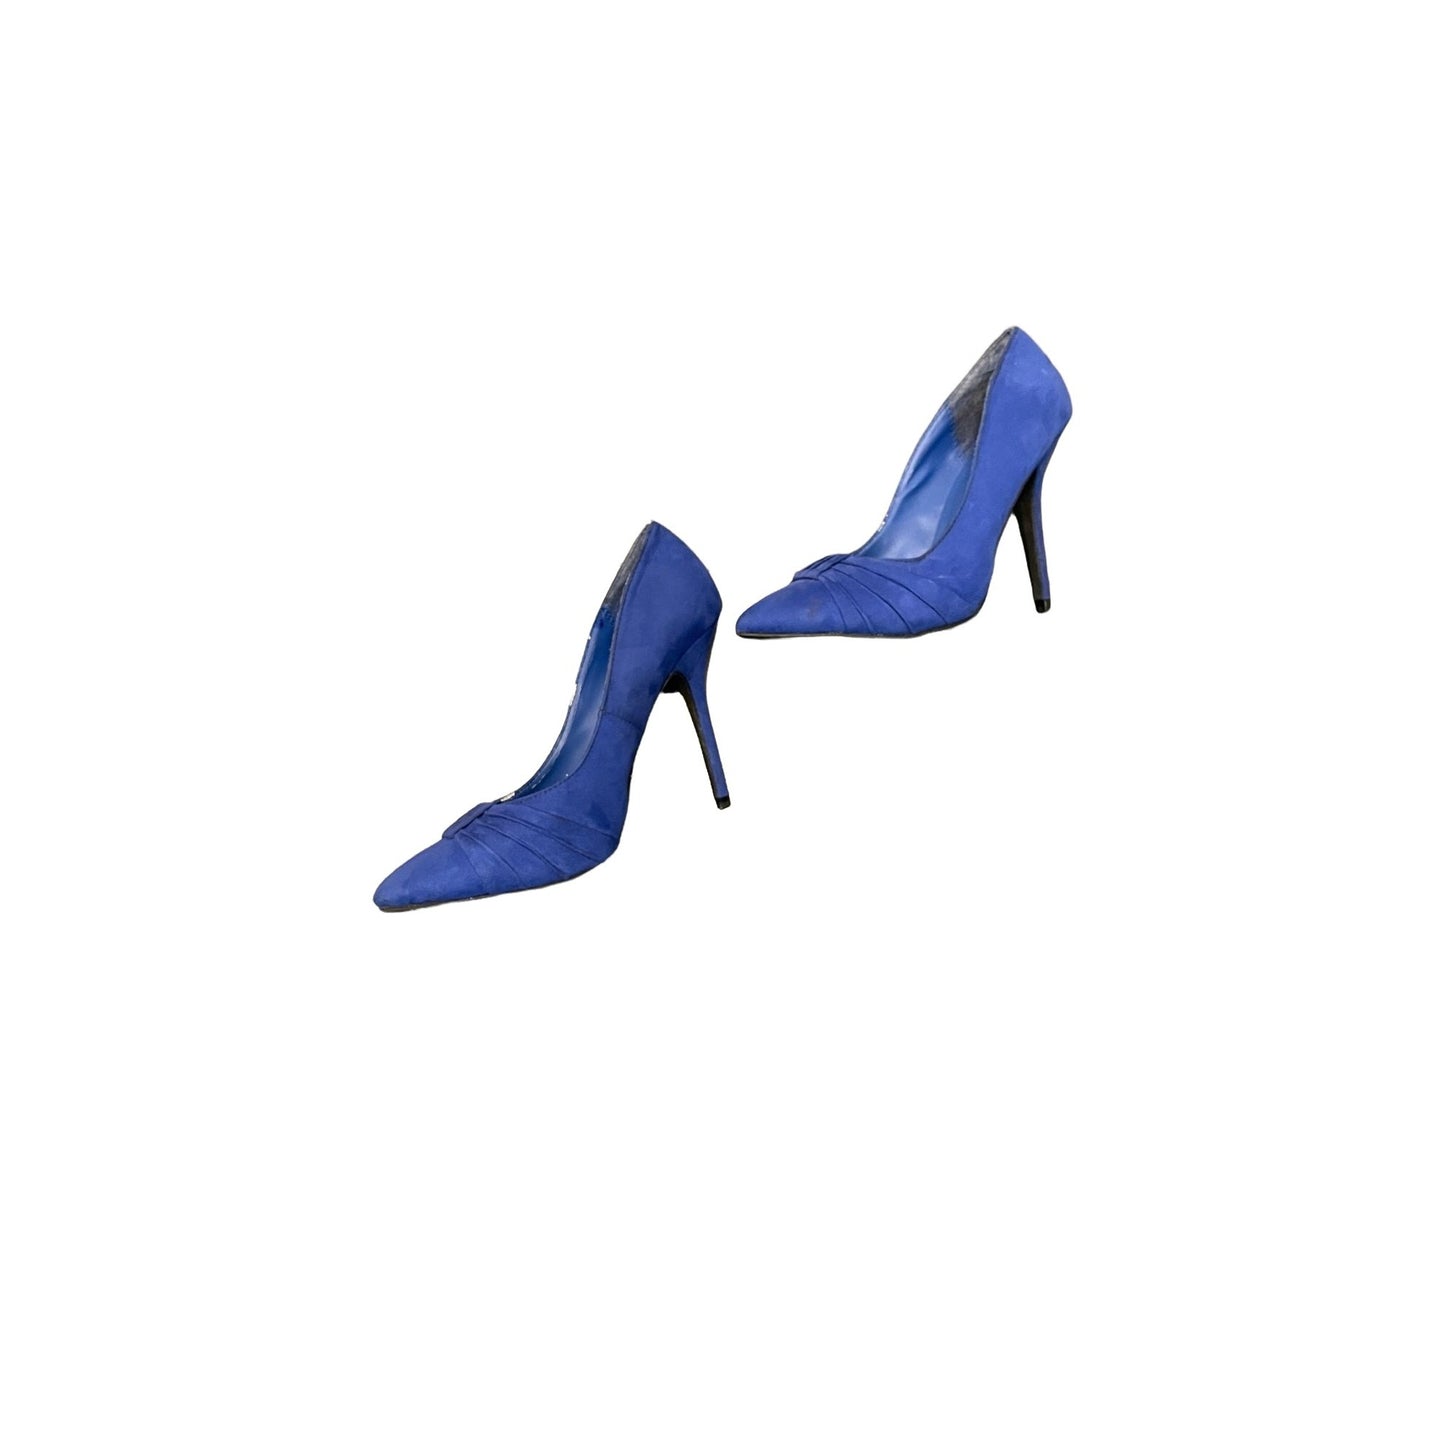 Blue Suede 4 inch Heels - 8